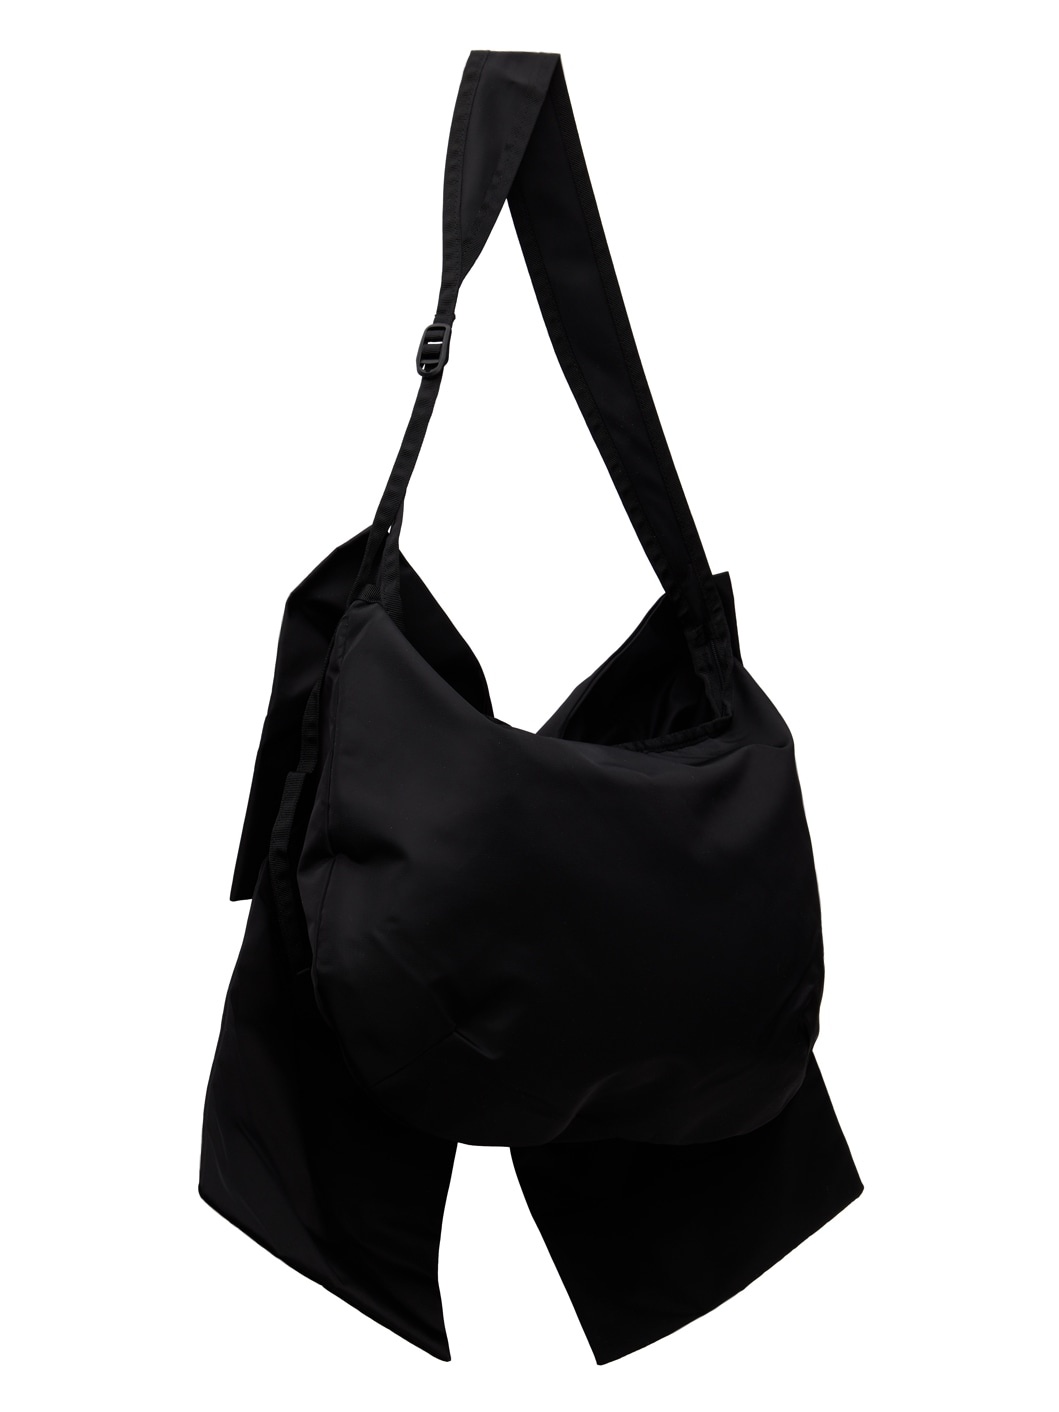 Black Verona Bag - 3